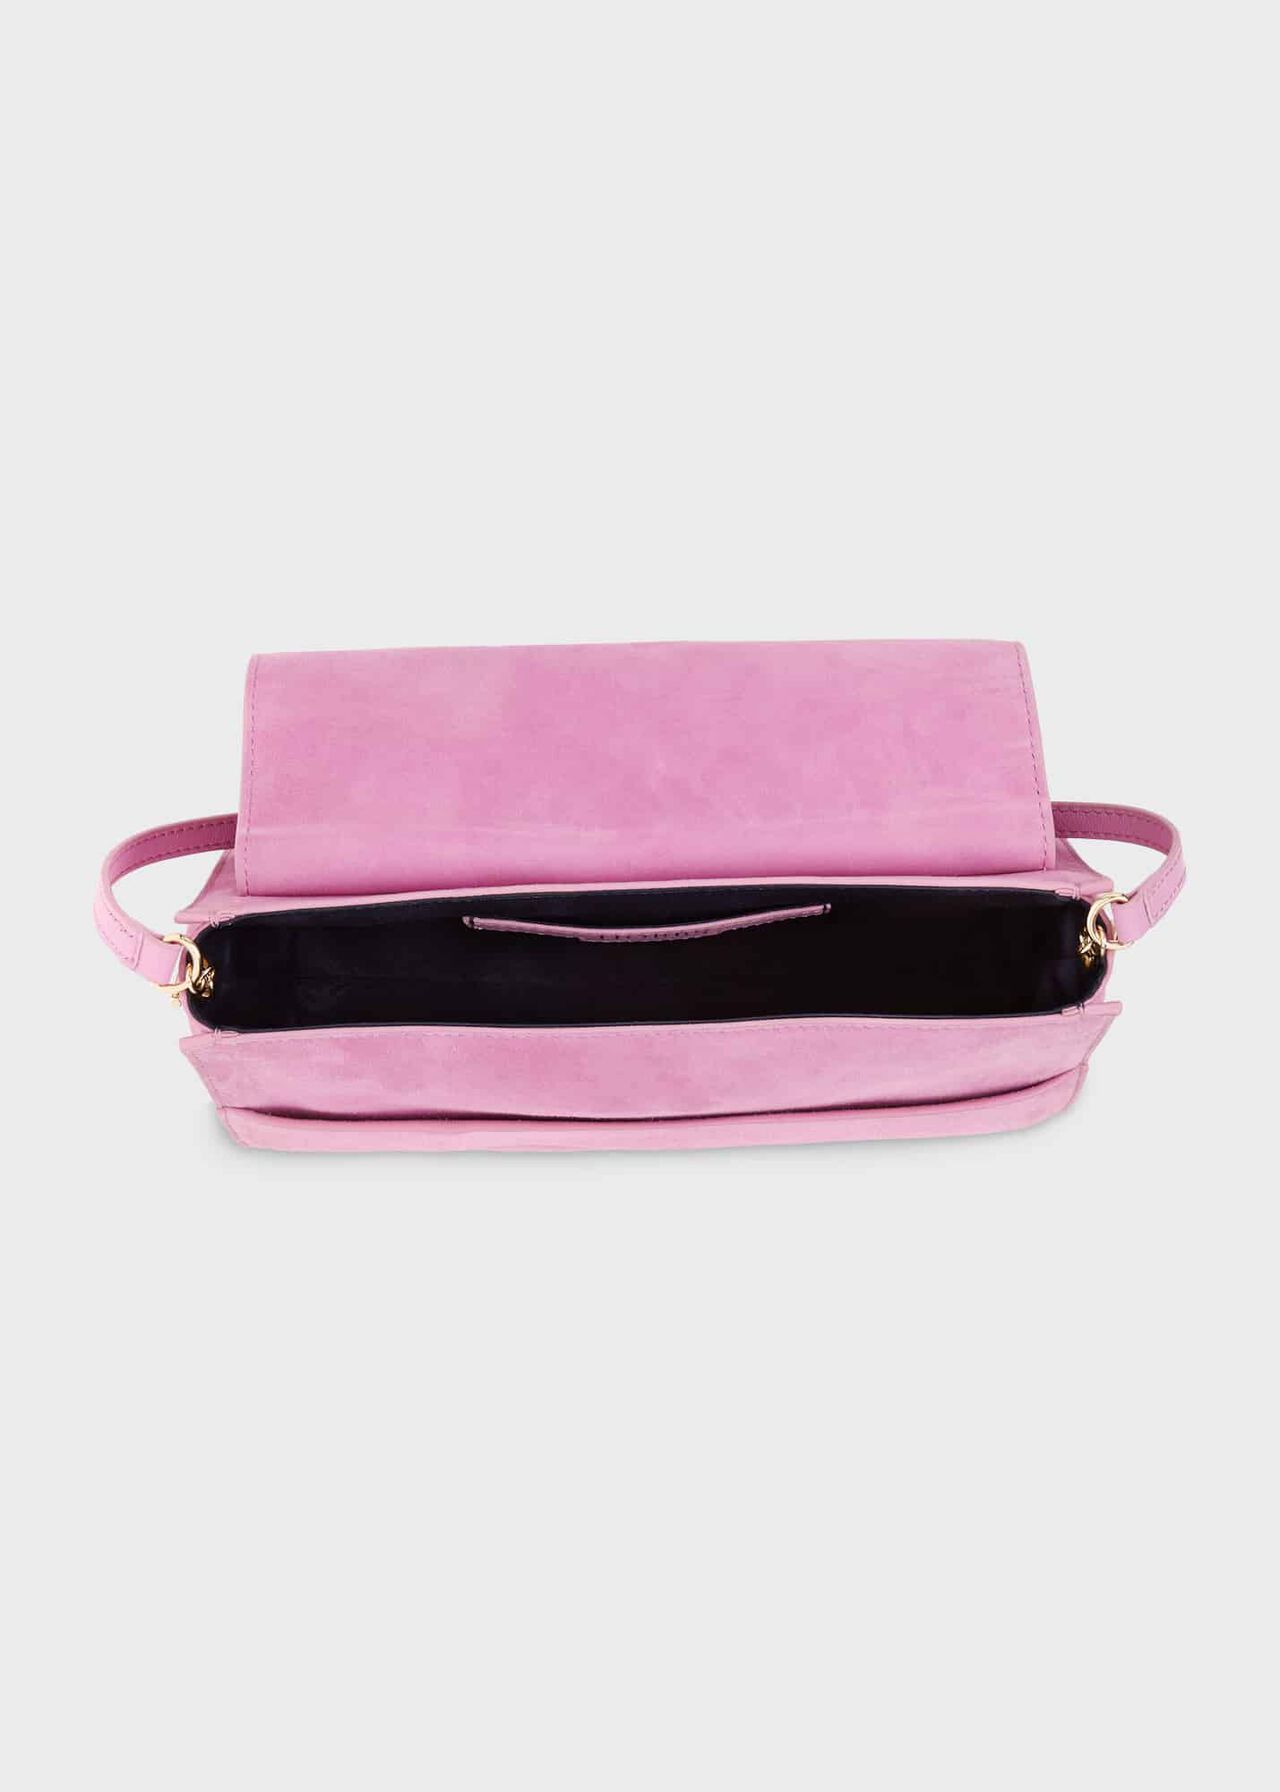 Cambridge Suede Clutch Bag, Carnation Pink, hi-res